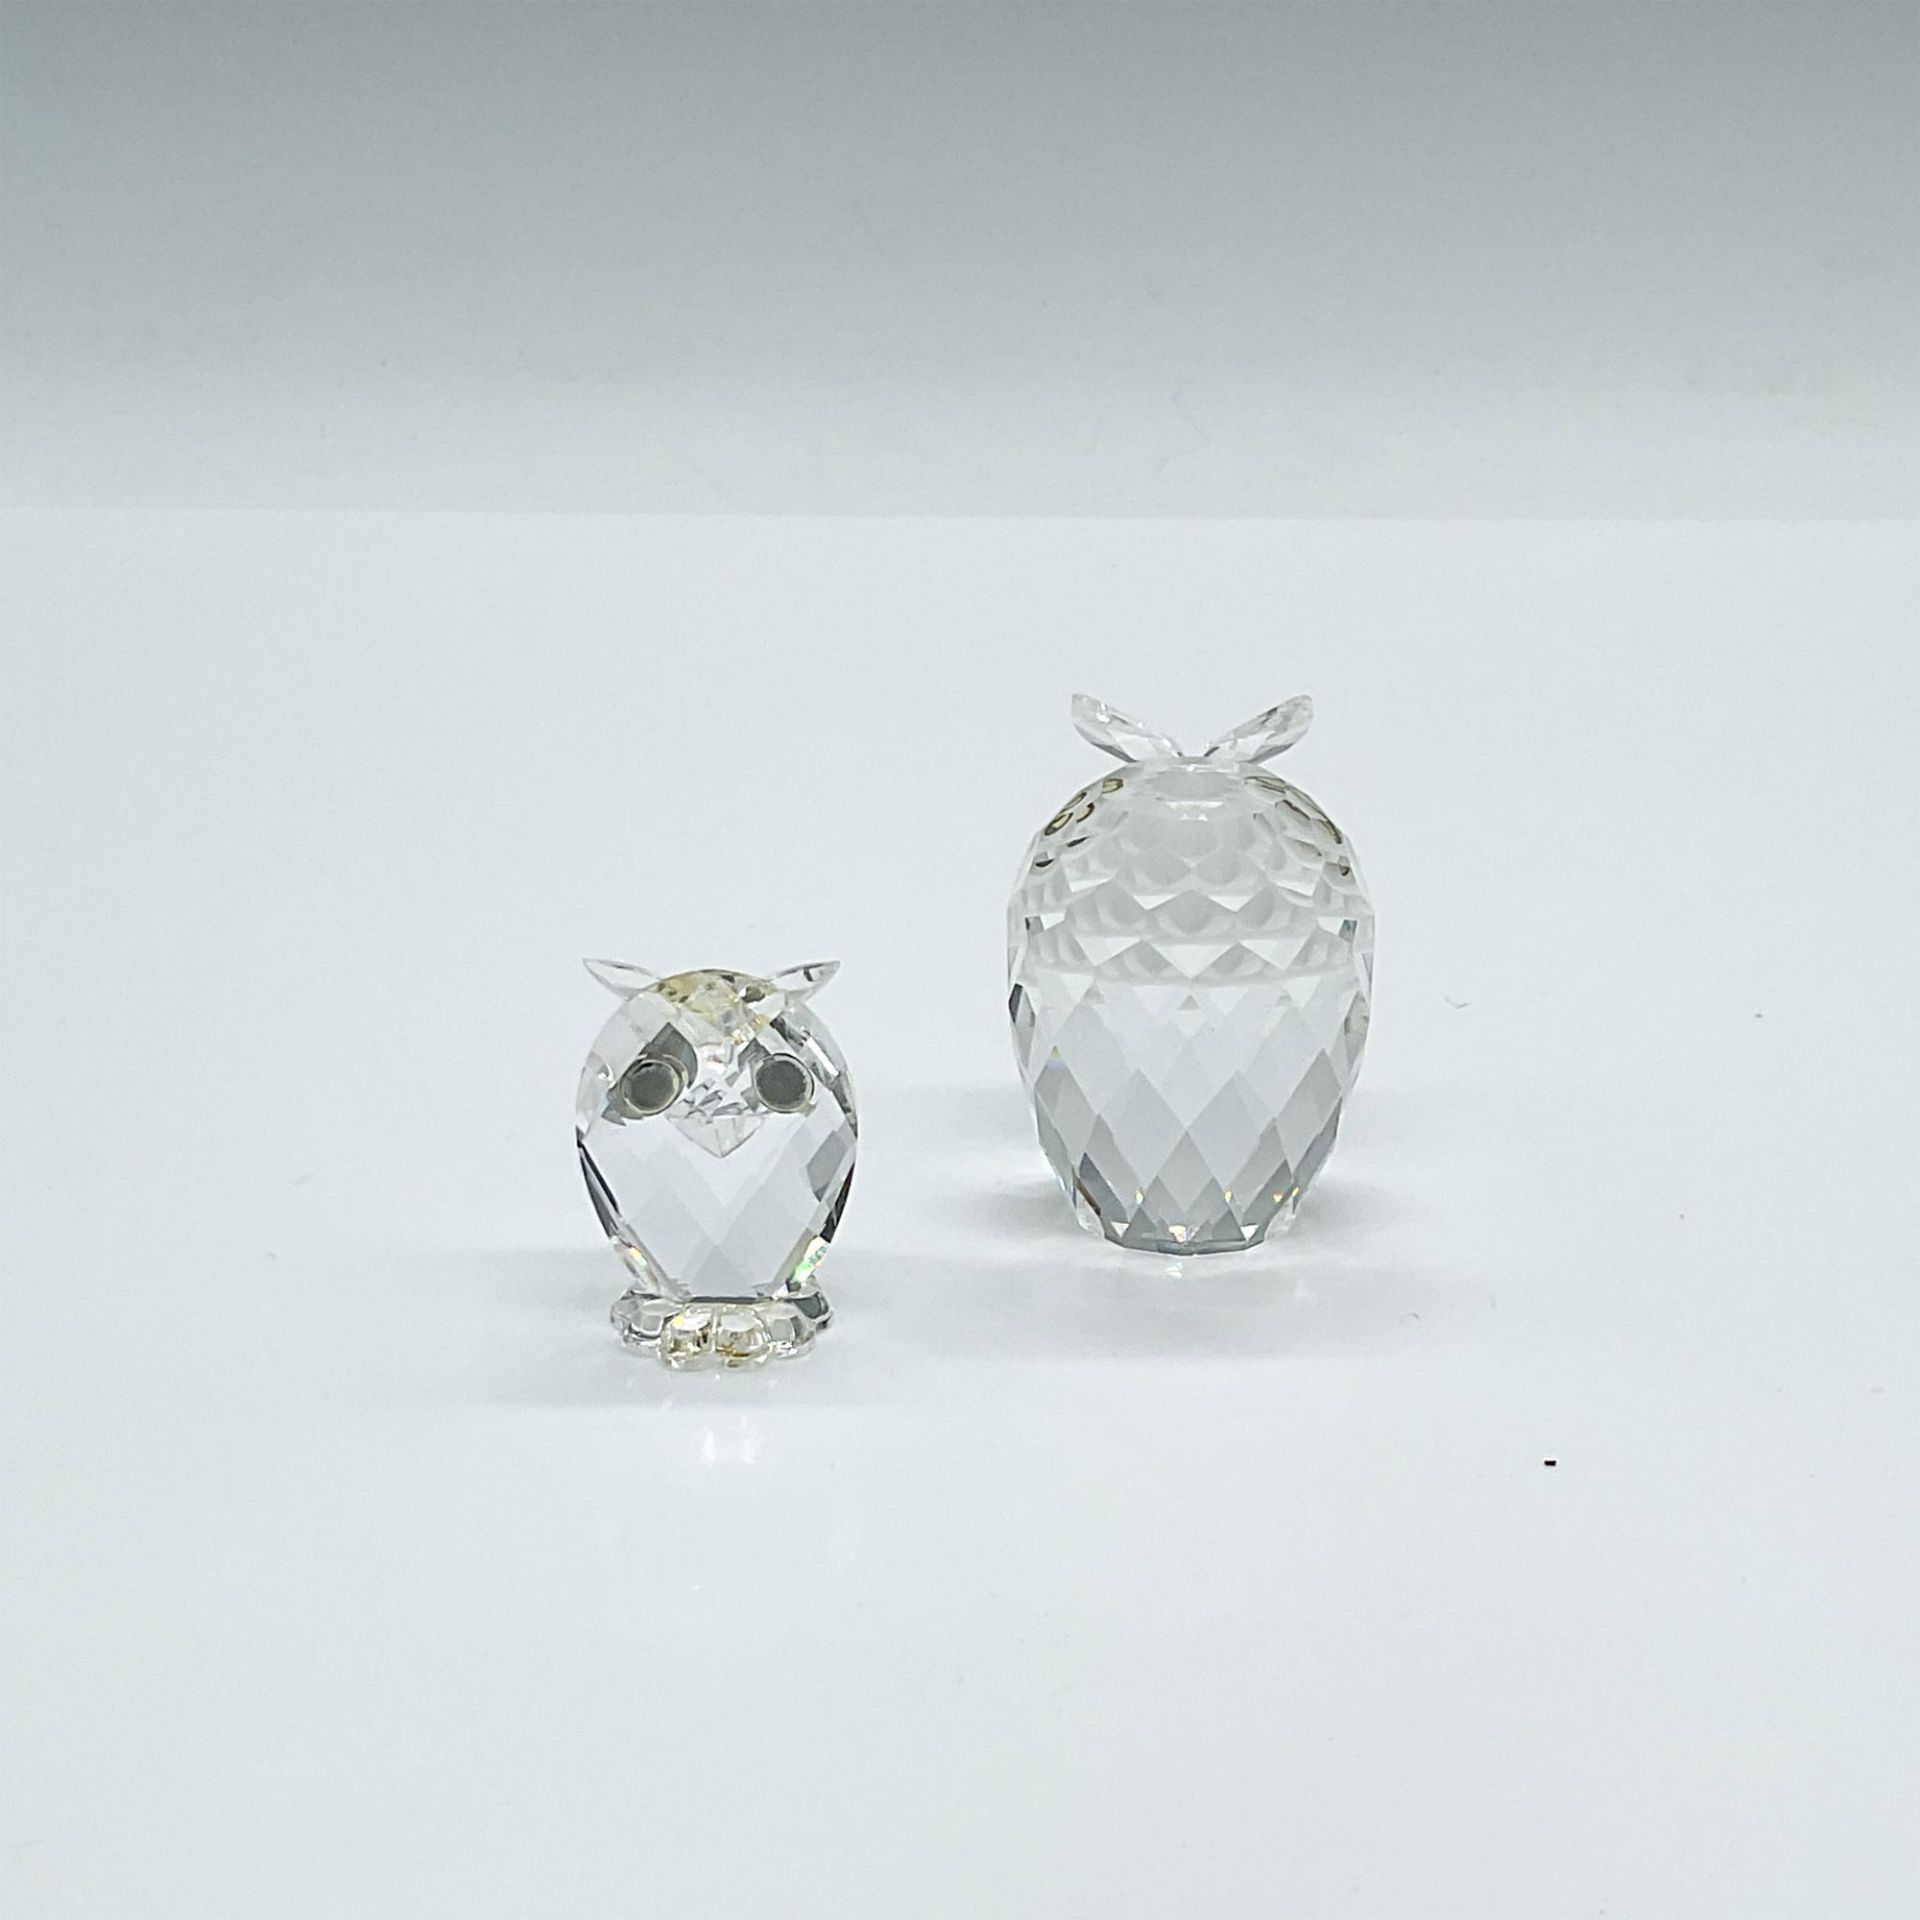 2pc Swarovski Crystal Figurines, Owls - Image 2 of 3